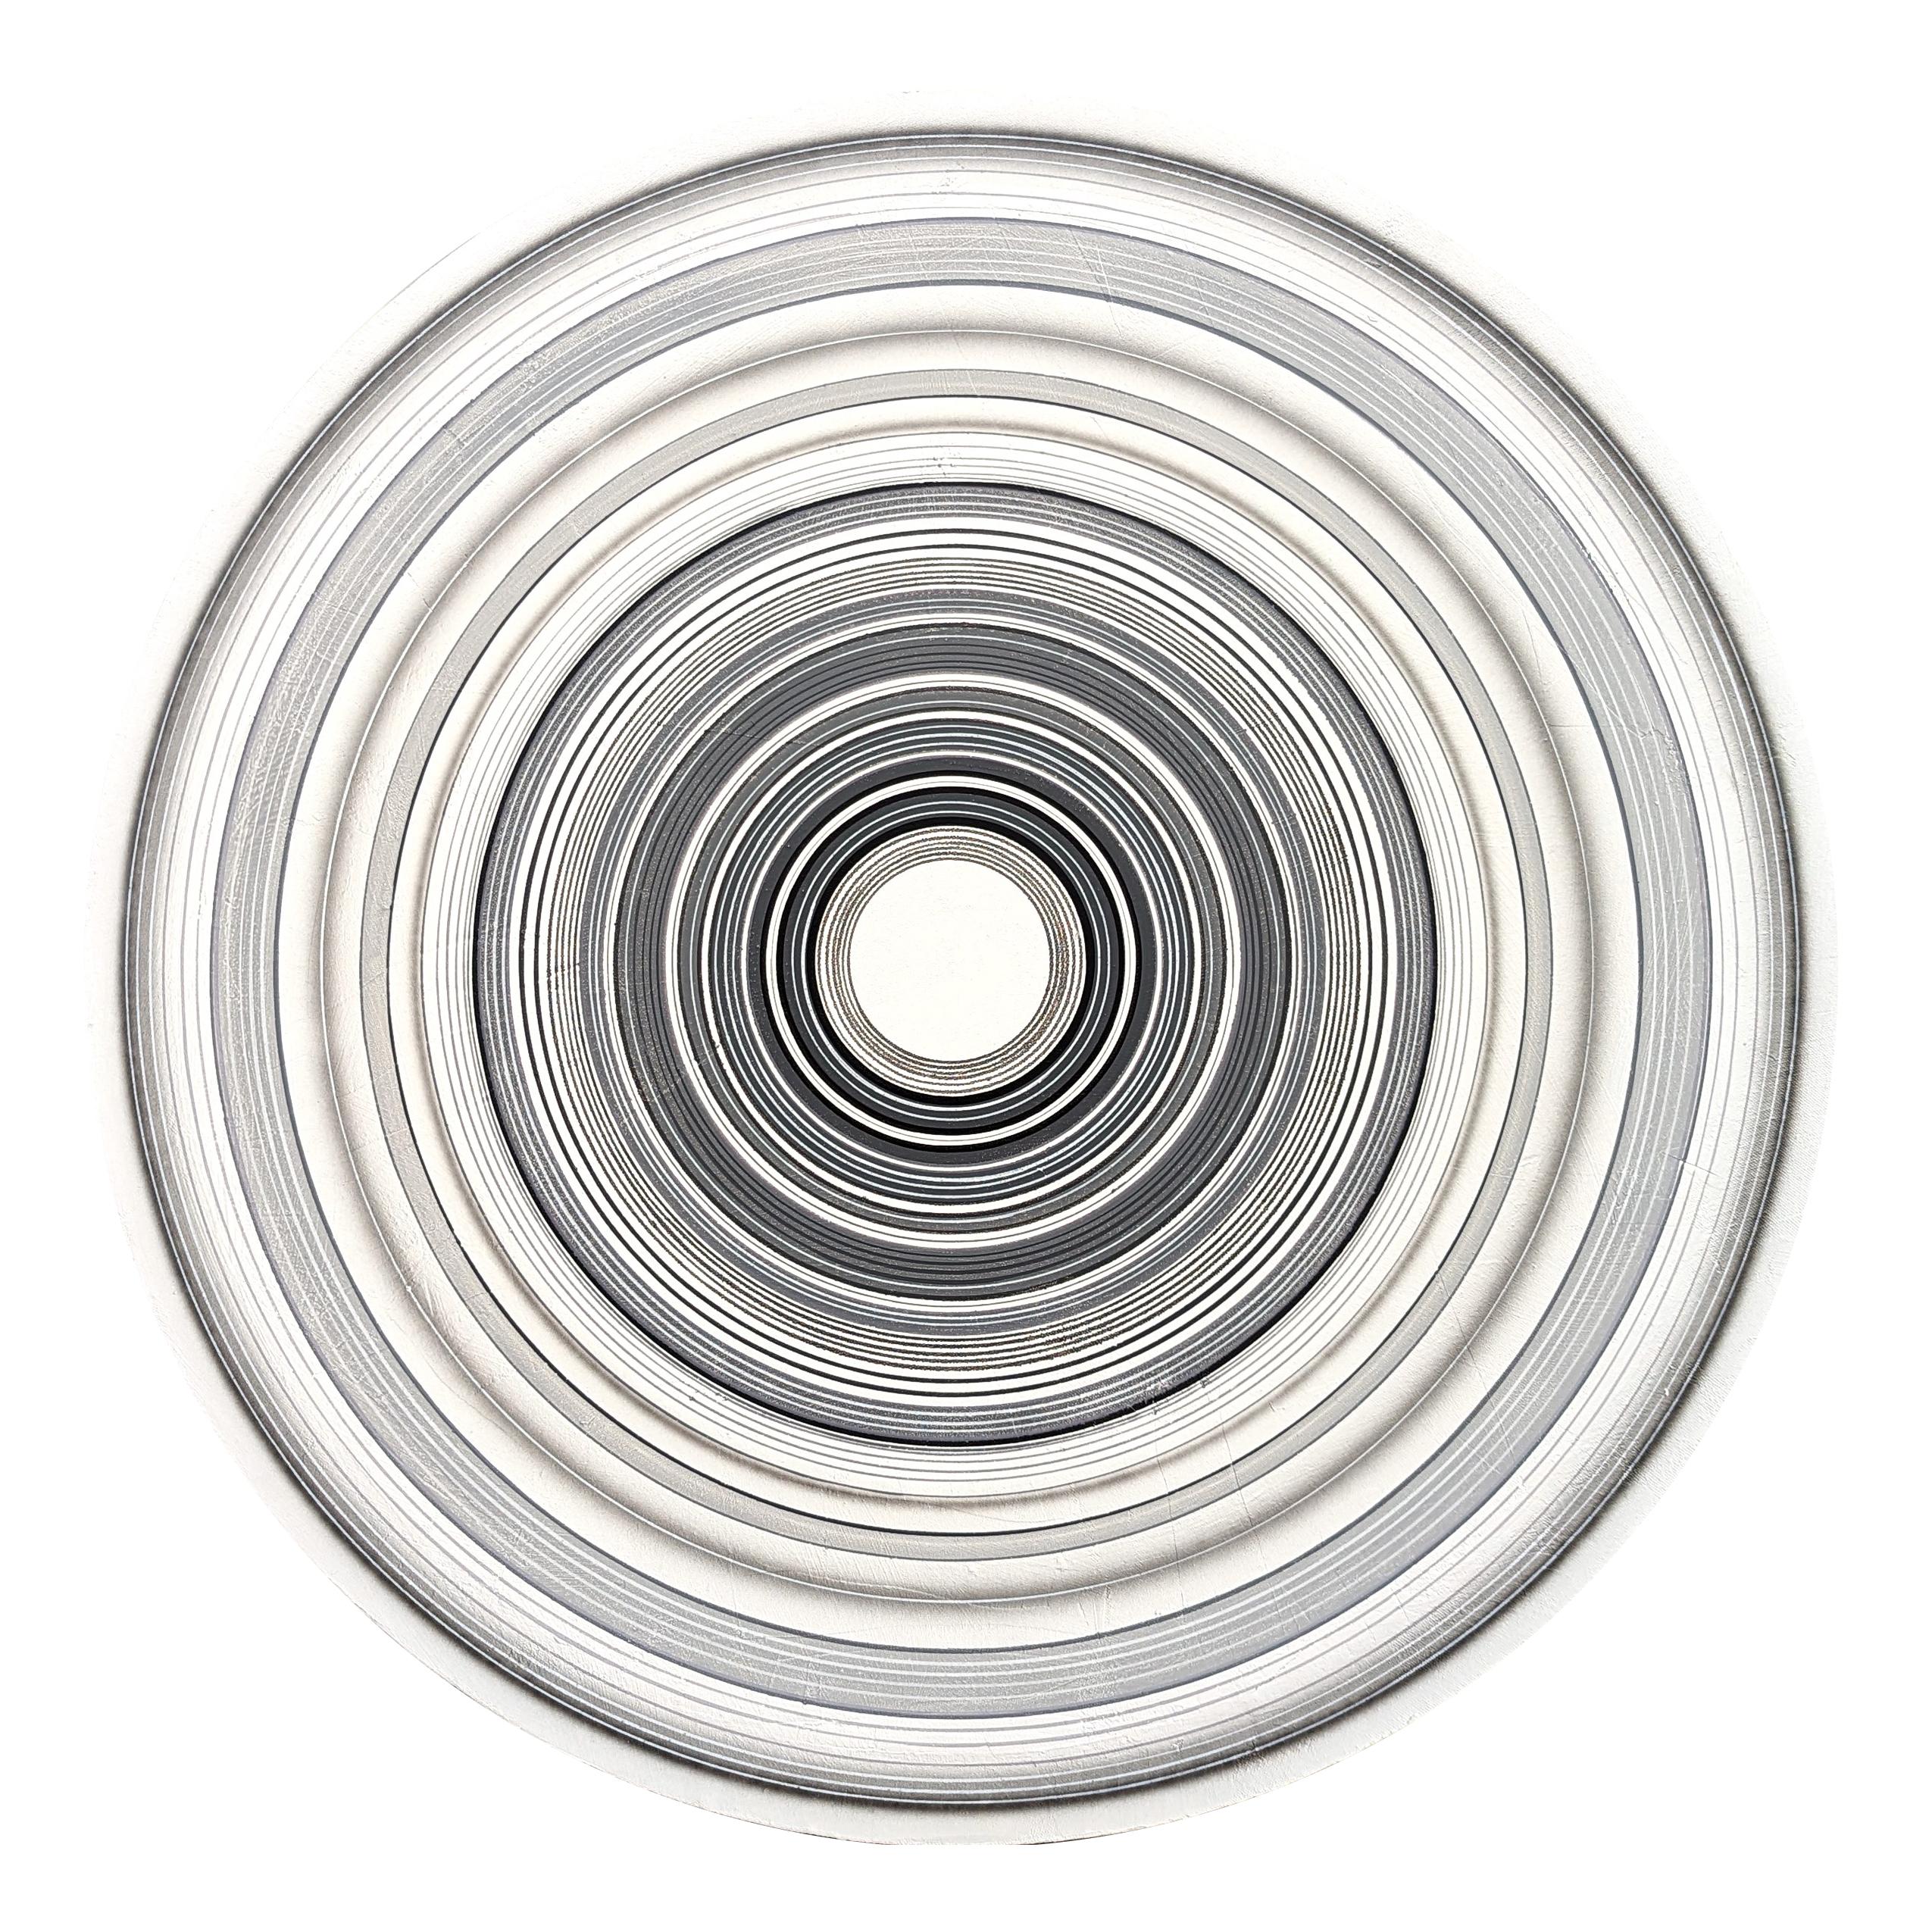 "Kool Thing" Contemporary Abstract Gray and White Concentric Circle Painting - Mixed Media Art by David Hardaker